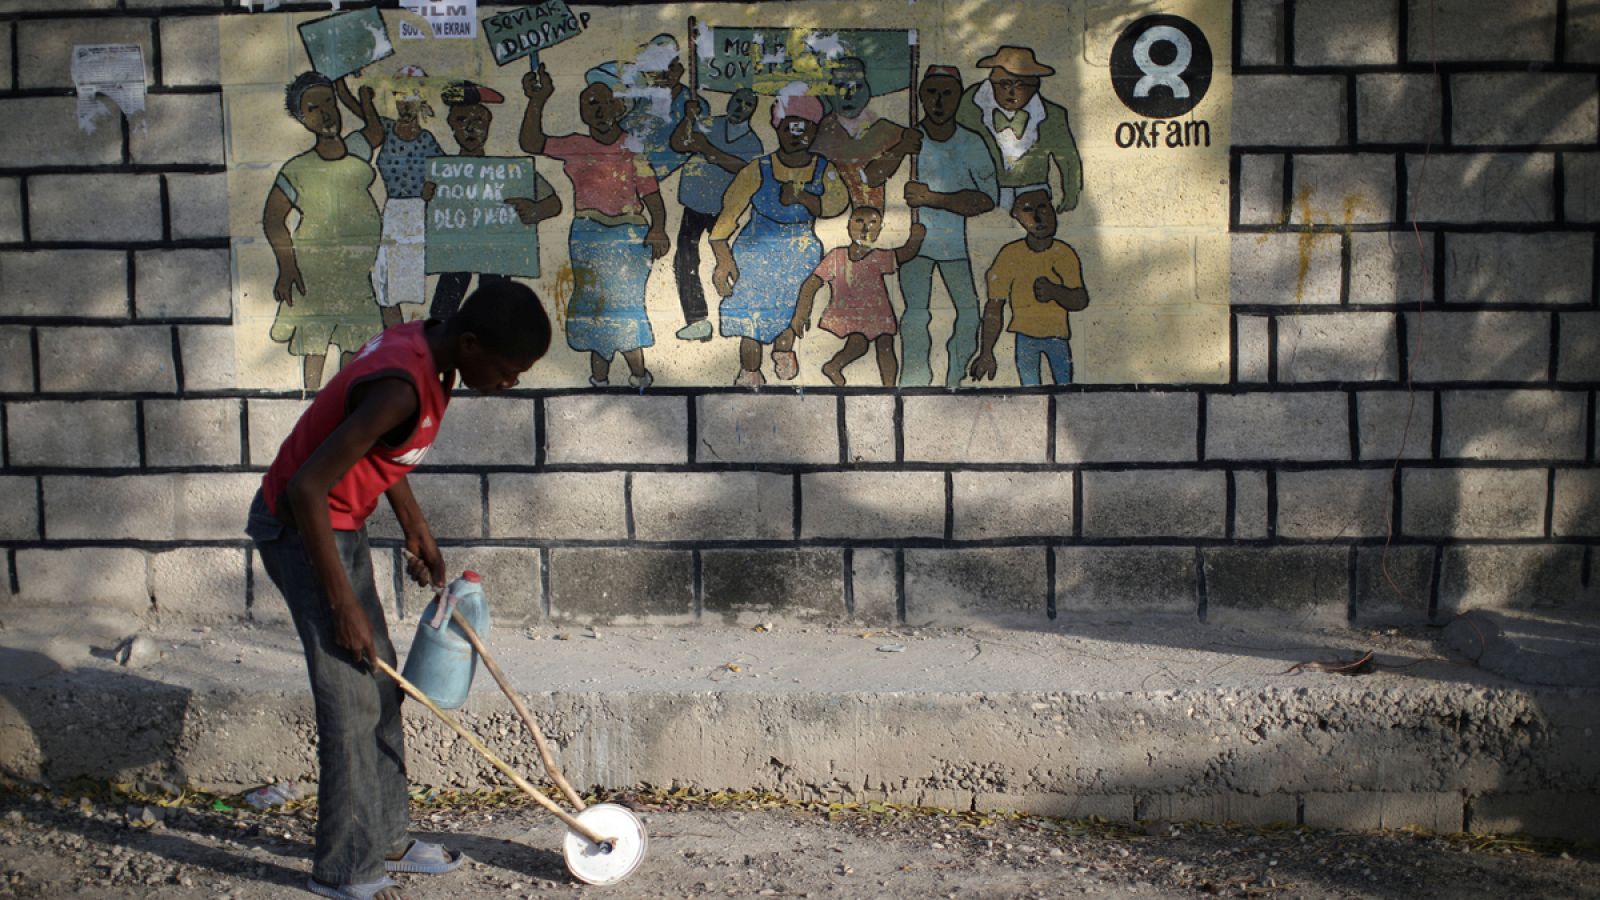 Telediario 1: Sospechosos del escándalo sexual de Oxfam en Haití amenazaron a testigos | RTVE Play